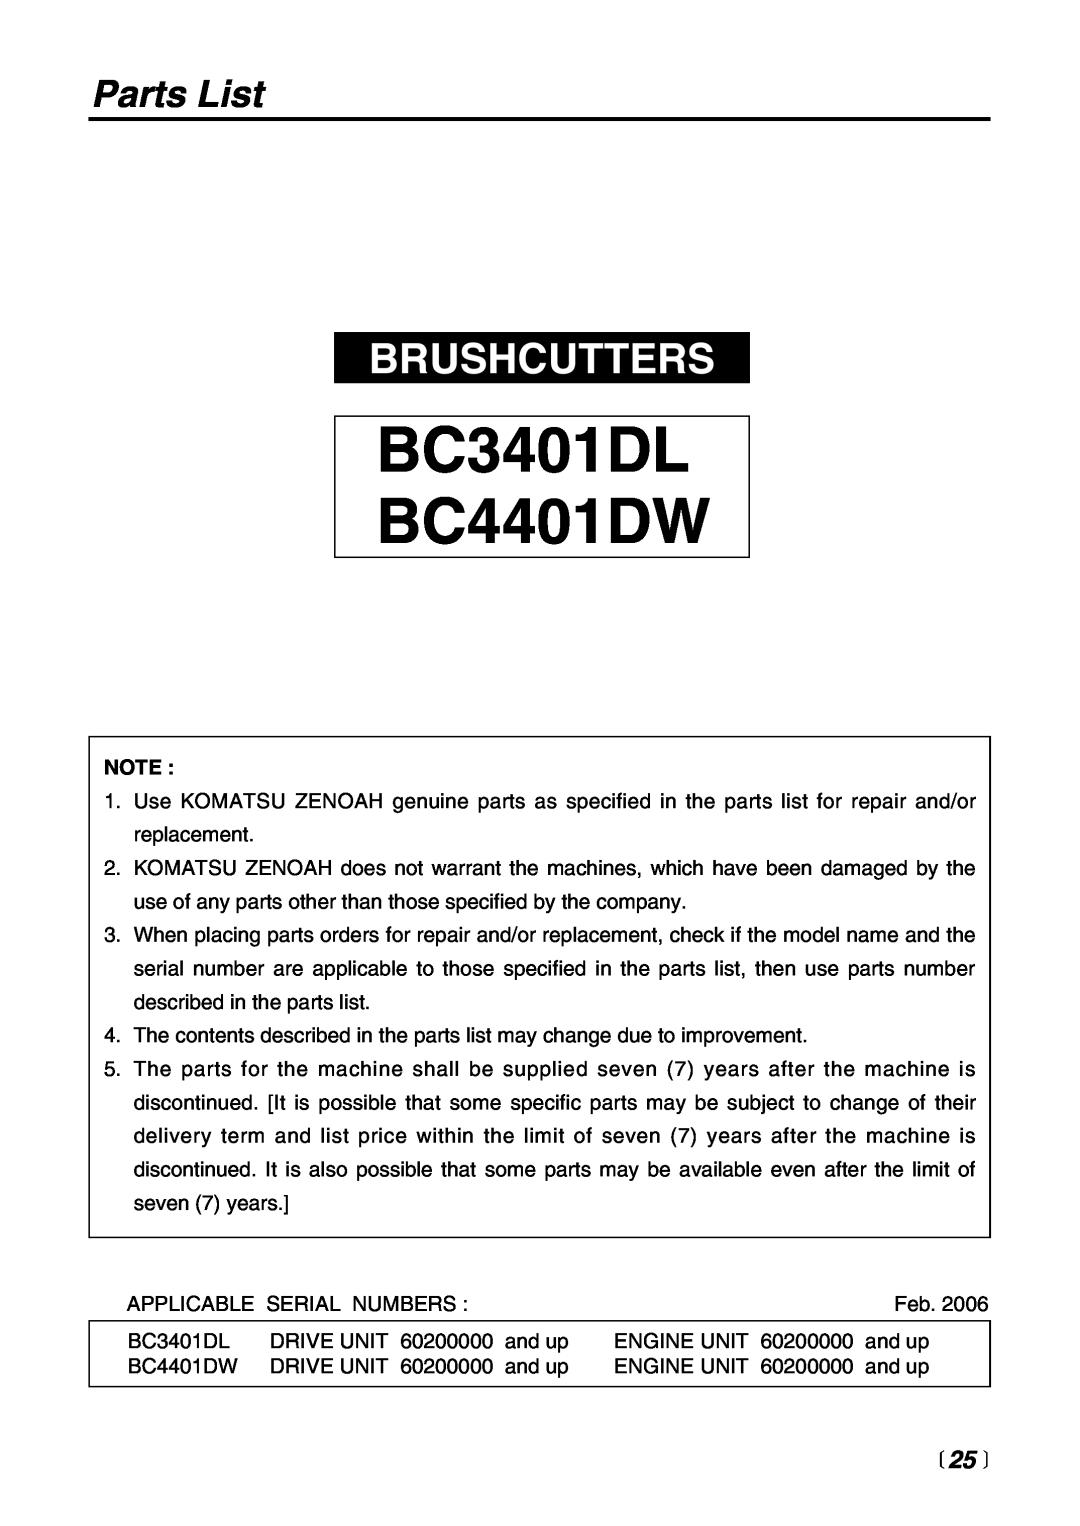 Zenoah manual Parts List, BC3401DL BC4401DW, Brushcutters,  25  